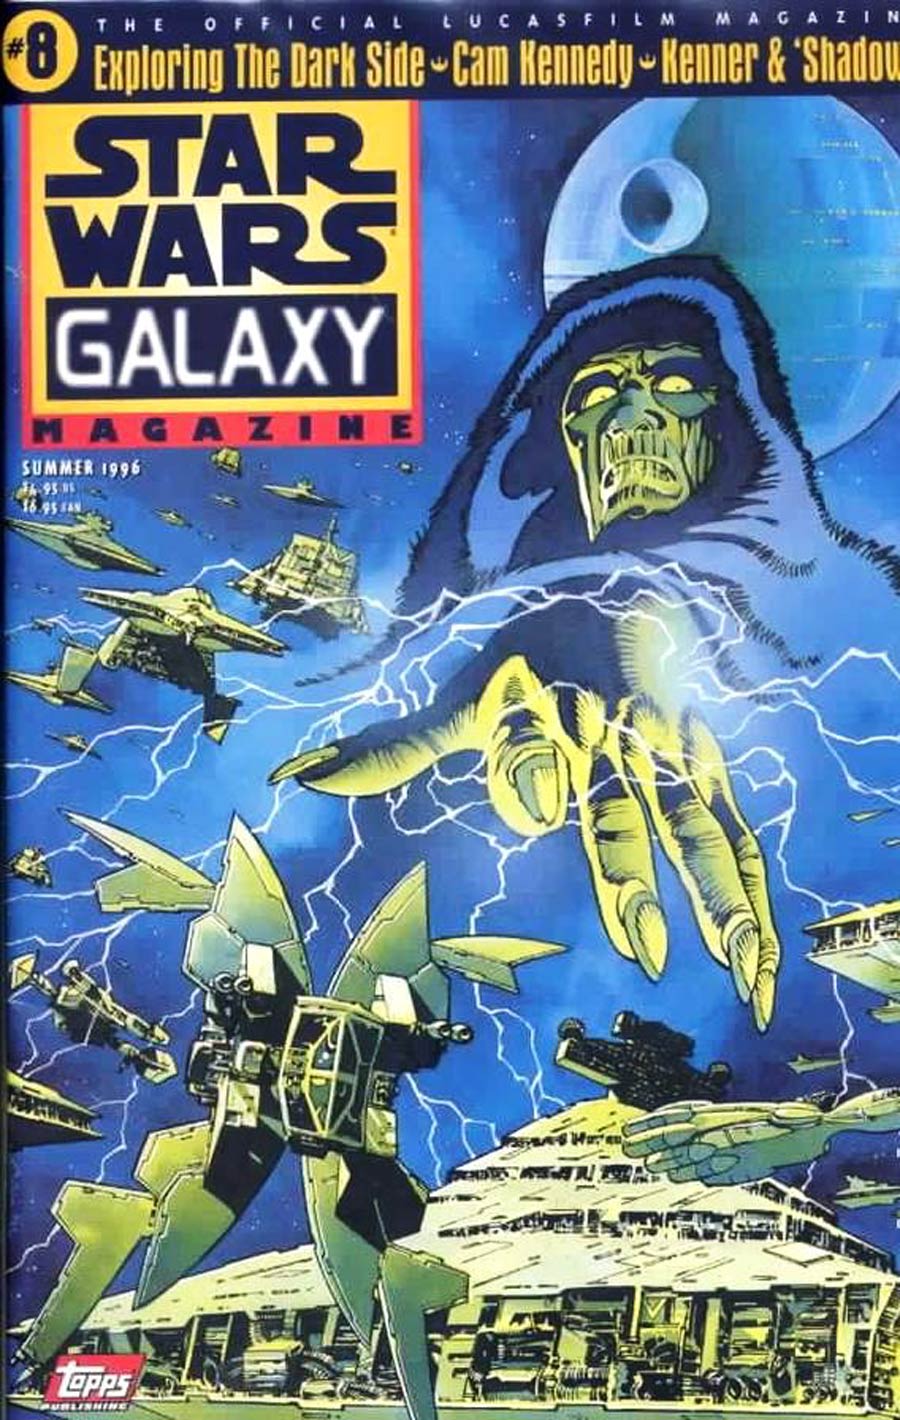 Star Wars Galaxy Magazine #8 Cover B No Polybag